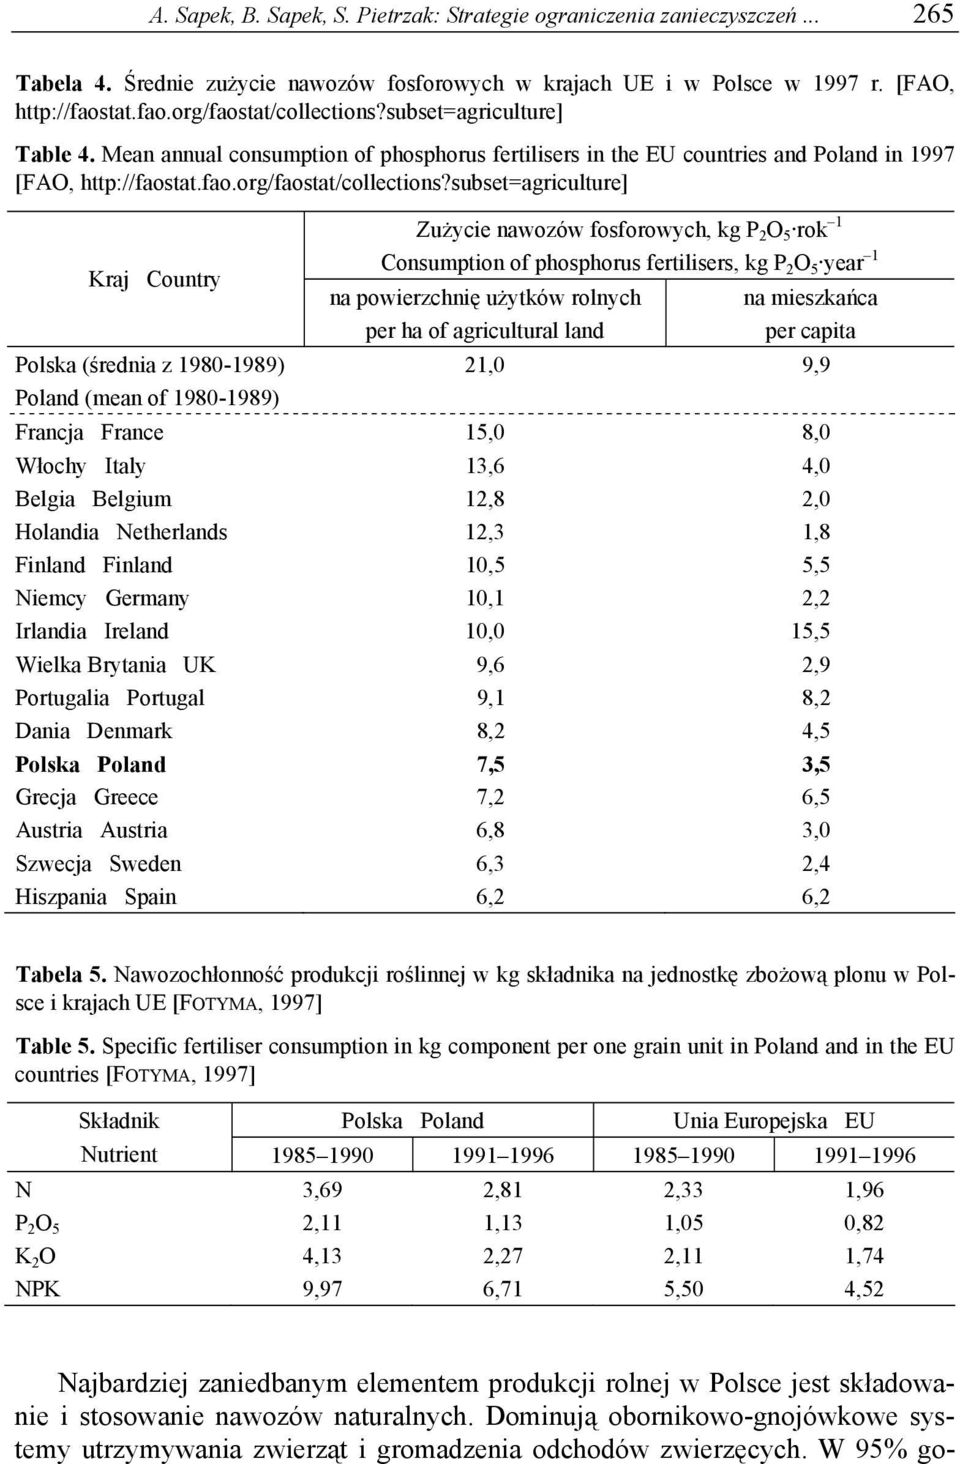 subset=agriculture] Kraj Country Polska (średnia z 1980-1989) Poland (mean of 1980-1989) Zużycie nawozów fosforowych, kg P 2 O 5 rok 1 Consumption of phosphorus fertilisers, kg P 2 O 5 year 1 na